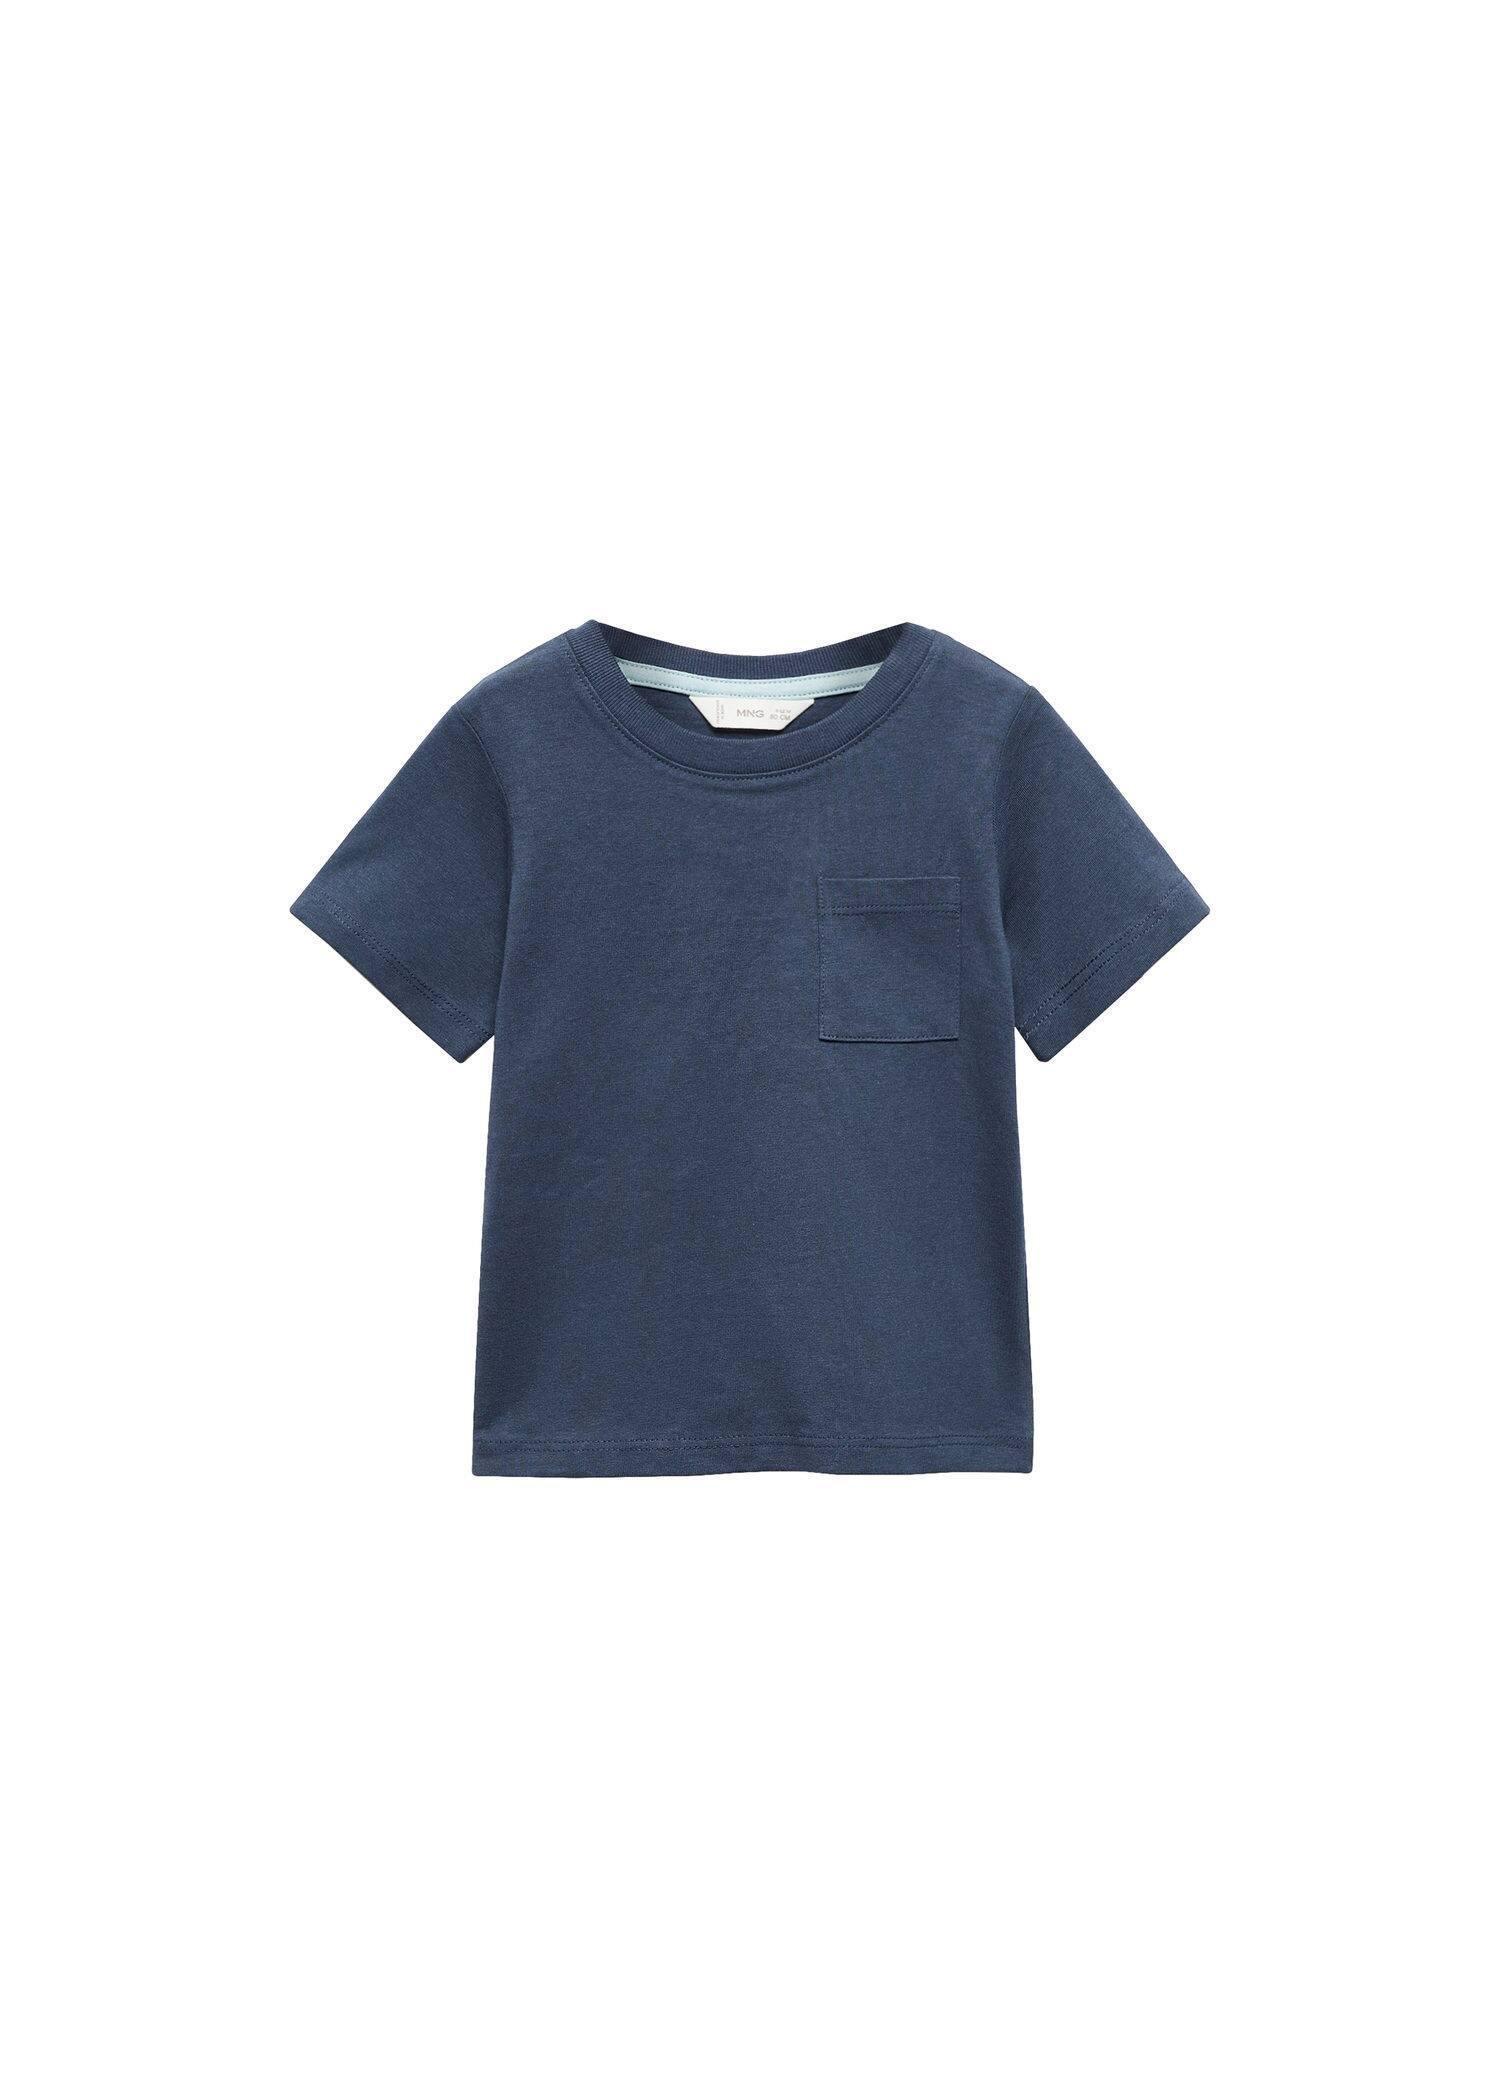 Mango - Navy Essential Cotton-Blend T-Shirt, Kids Boys